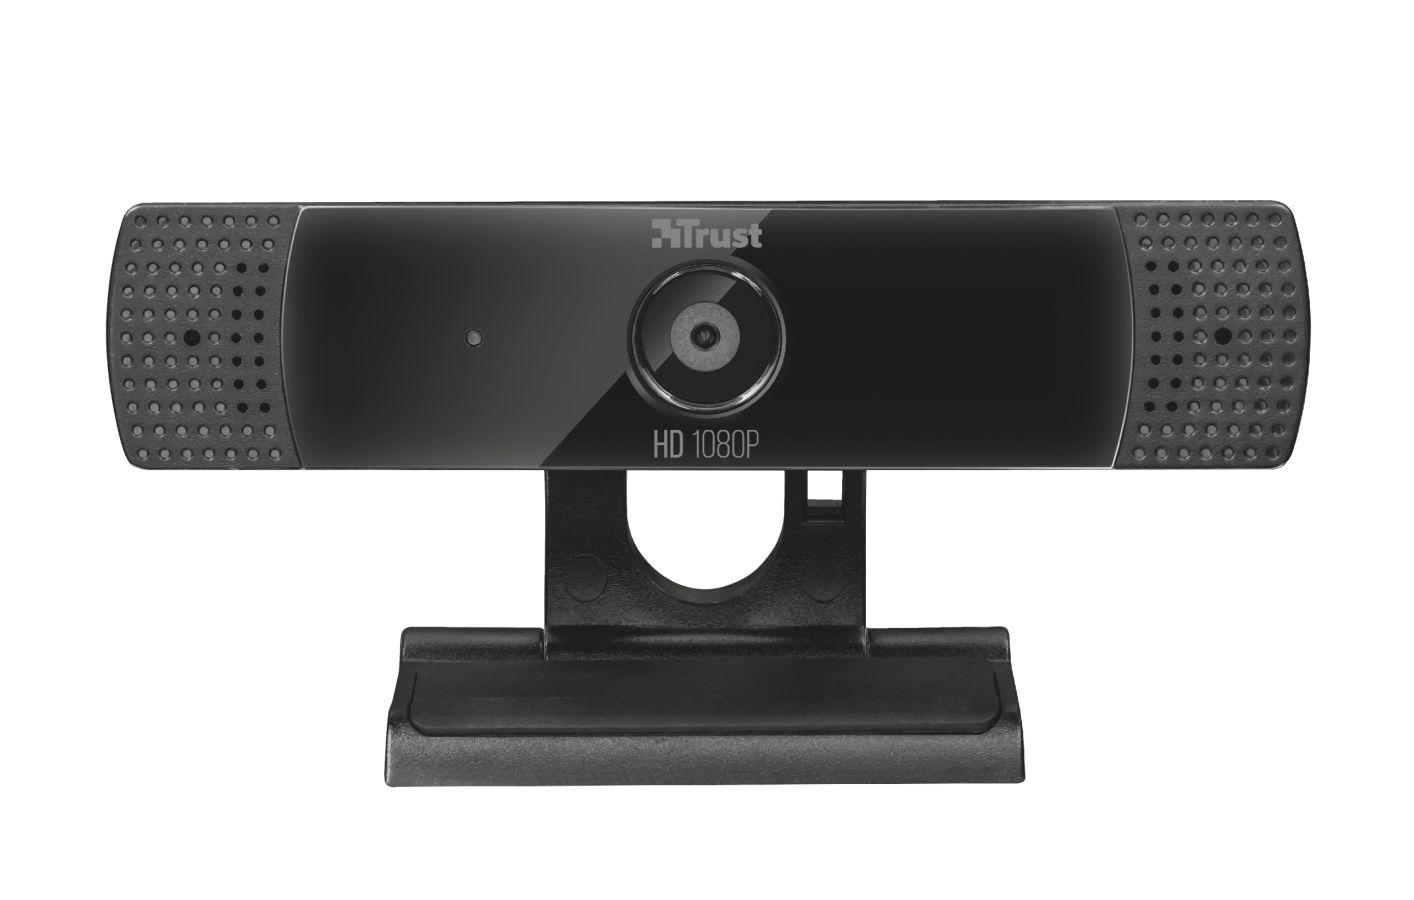 Trust GXT 1160 webcam 8 MP 1920 x 1080 pixels USB 2.0 Black